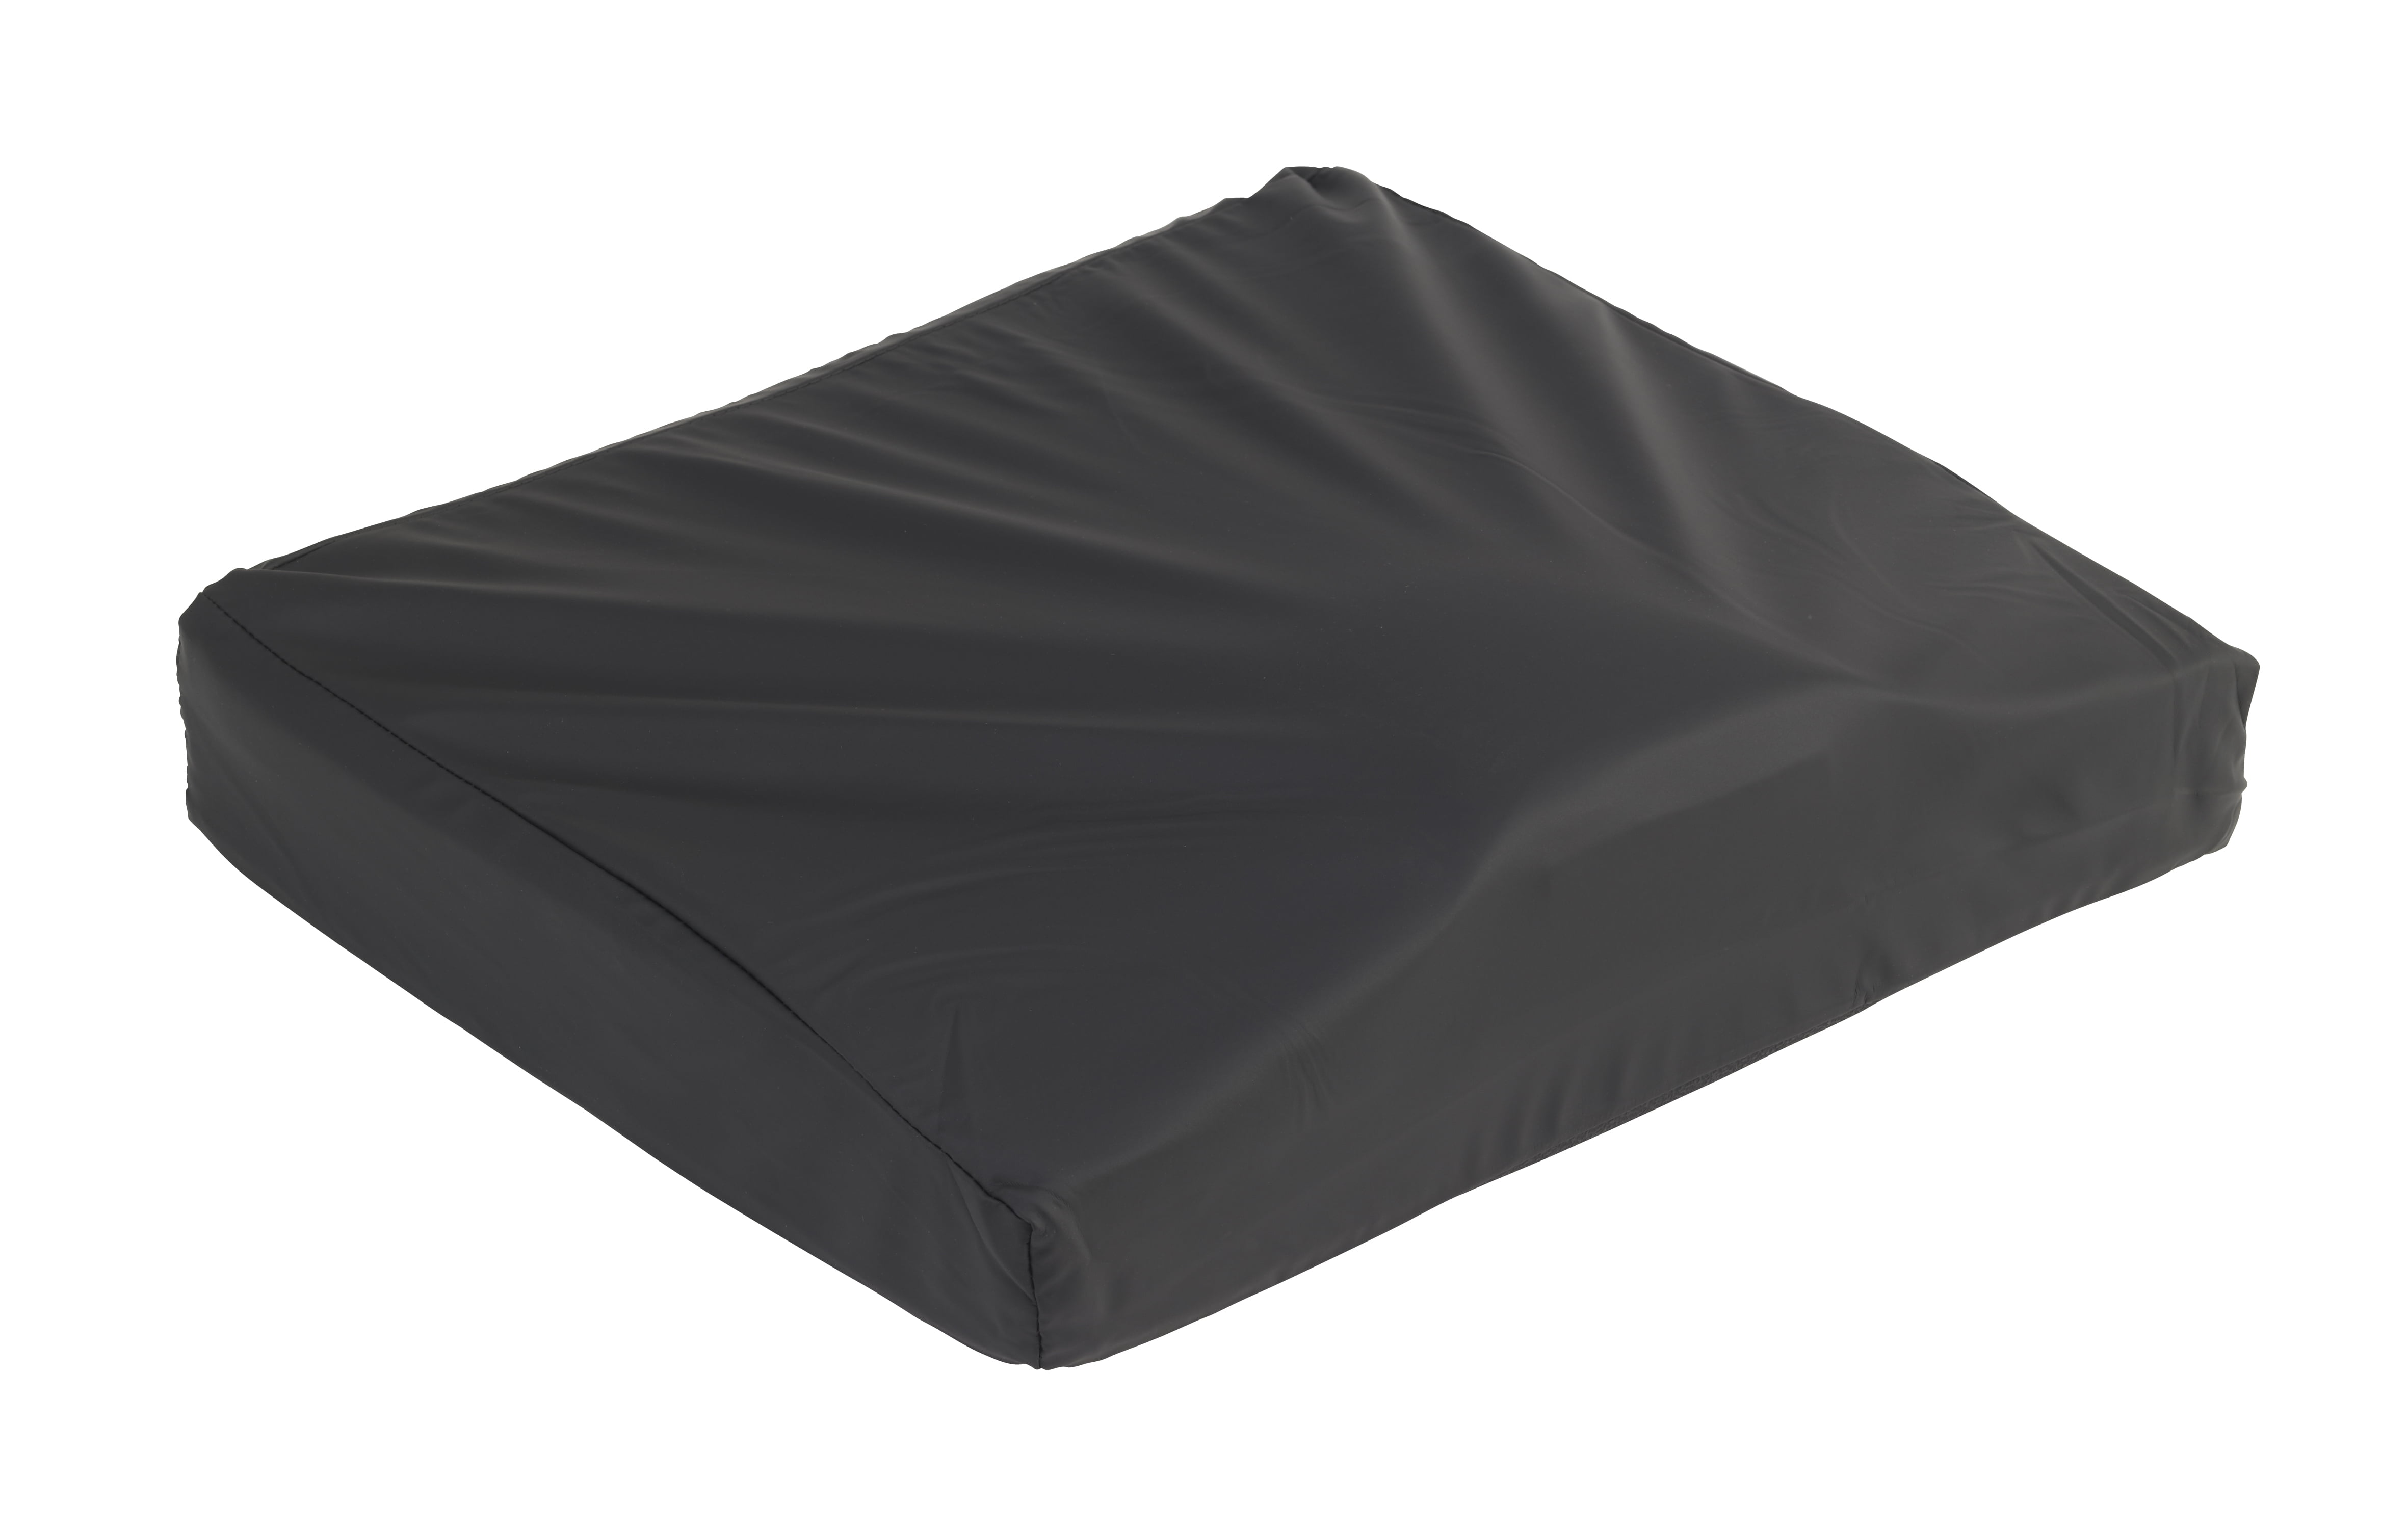 Medline EquaGel Contour Cushion, 16 x 16 inch